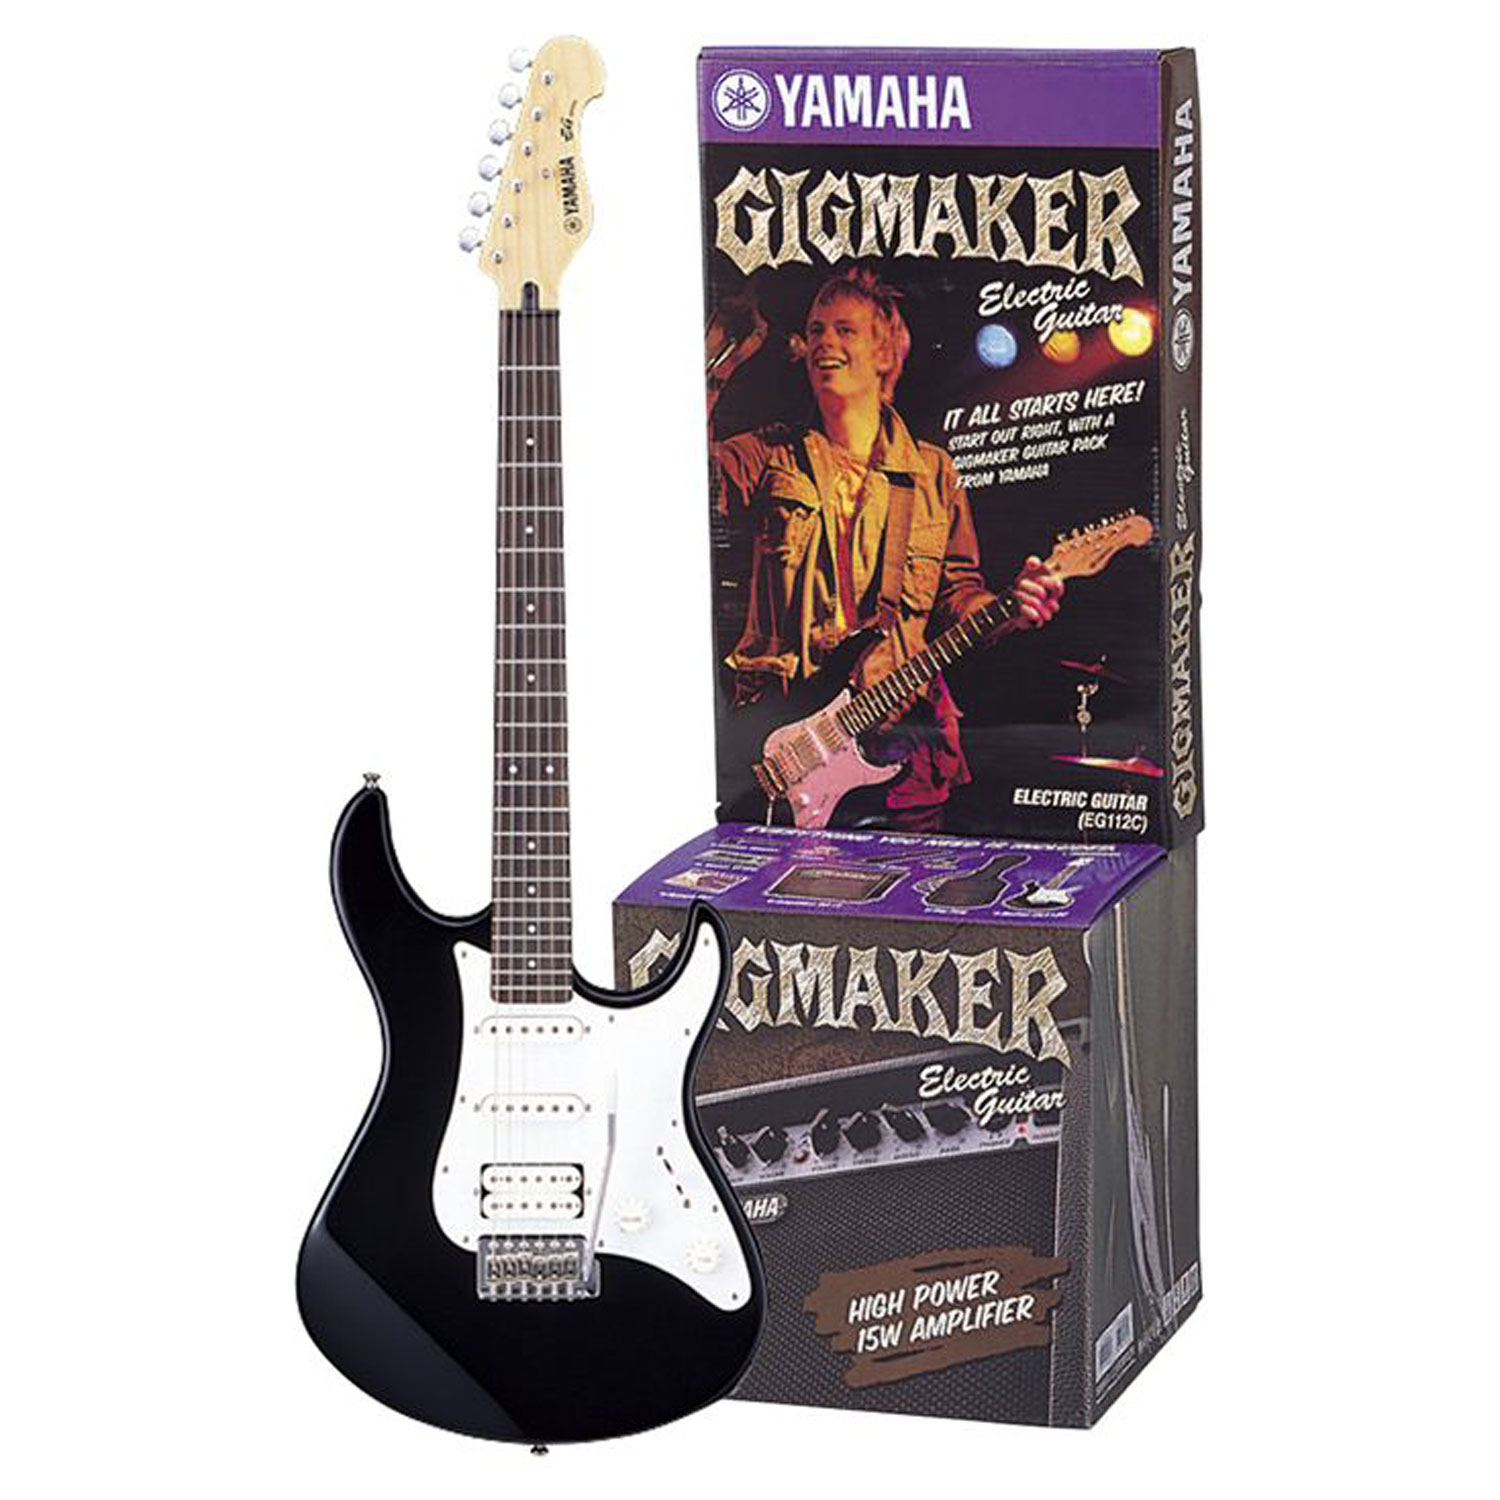 Yamaha Gigmaker Electric Guitar Pack (EG112GPII) - Black